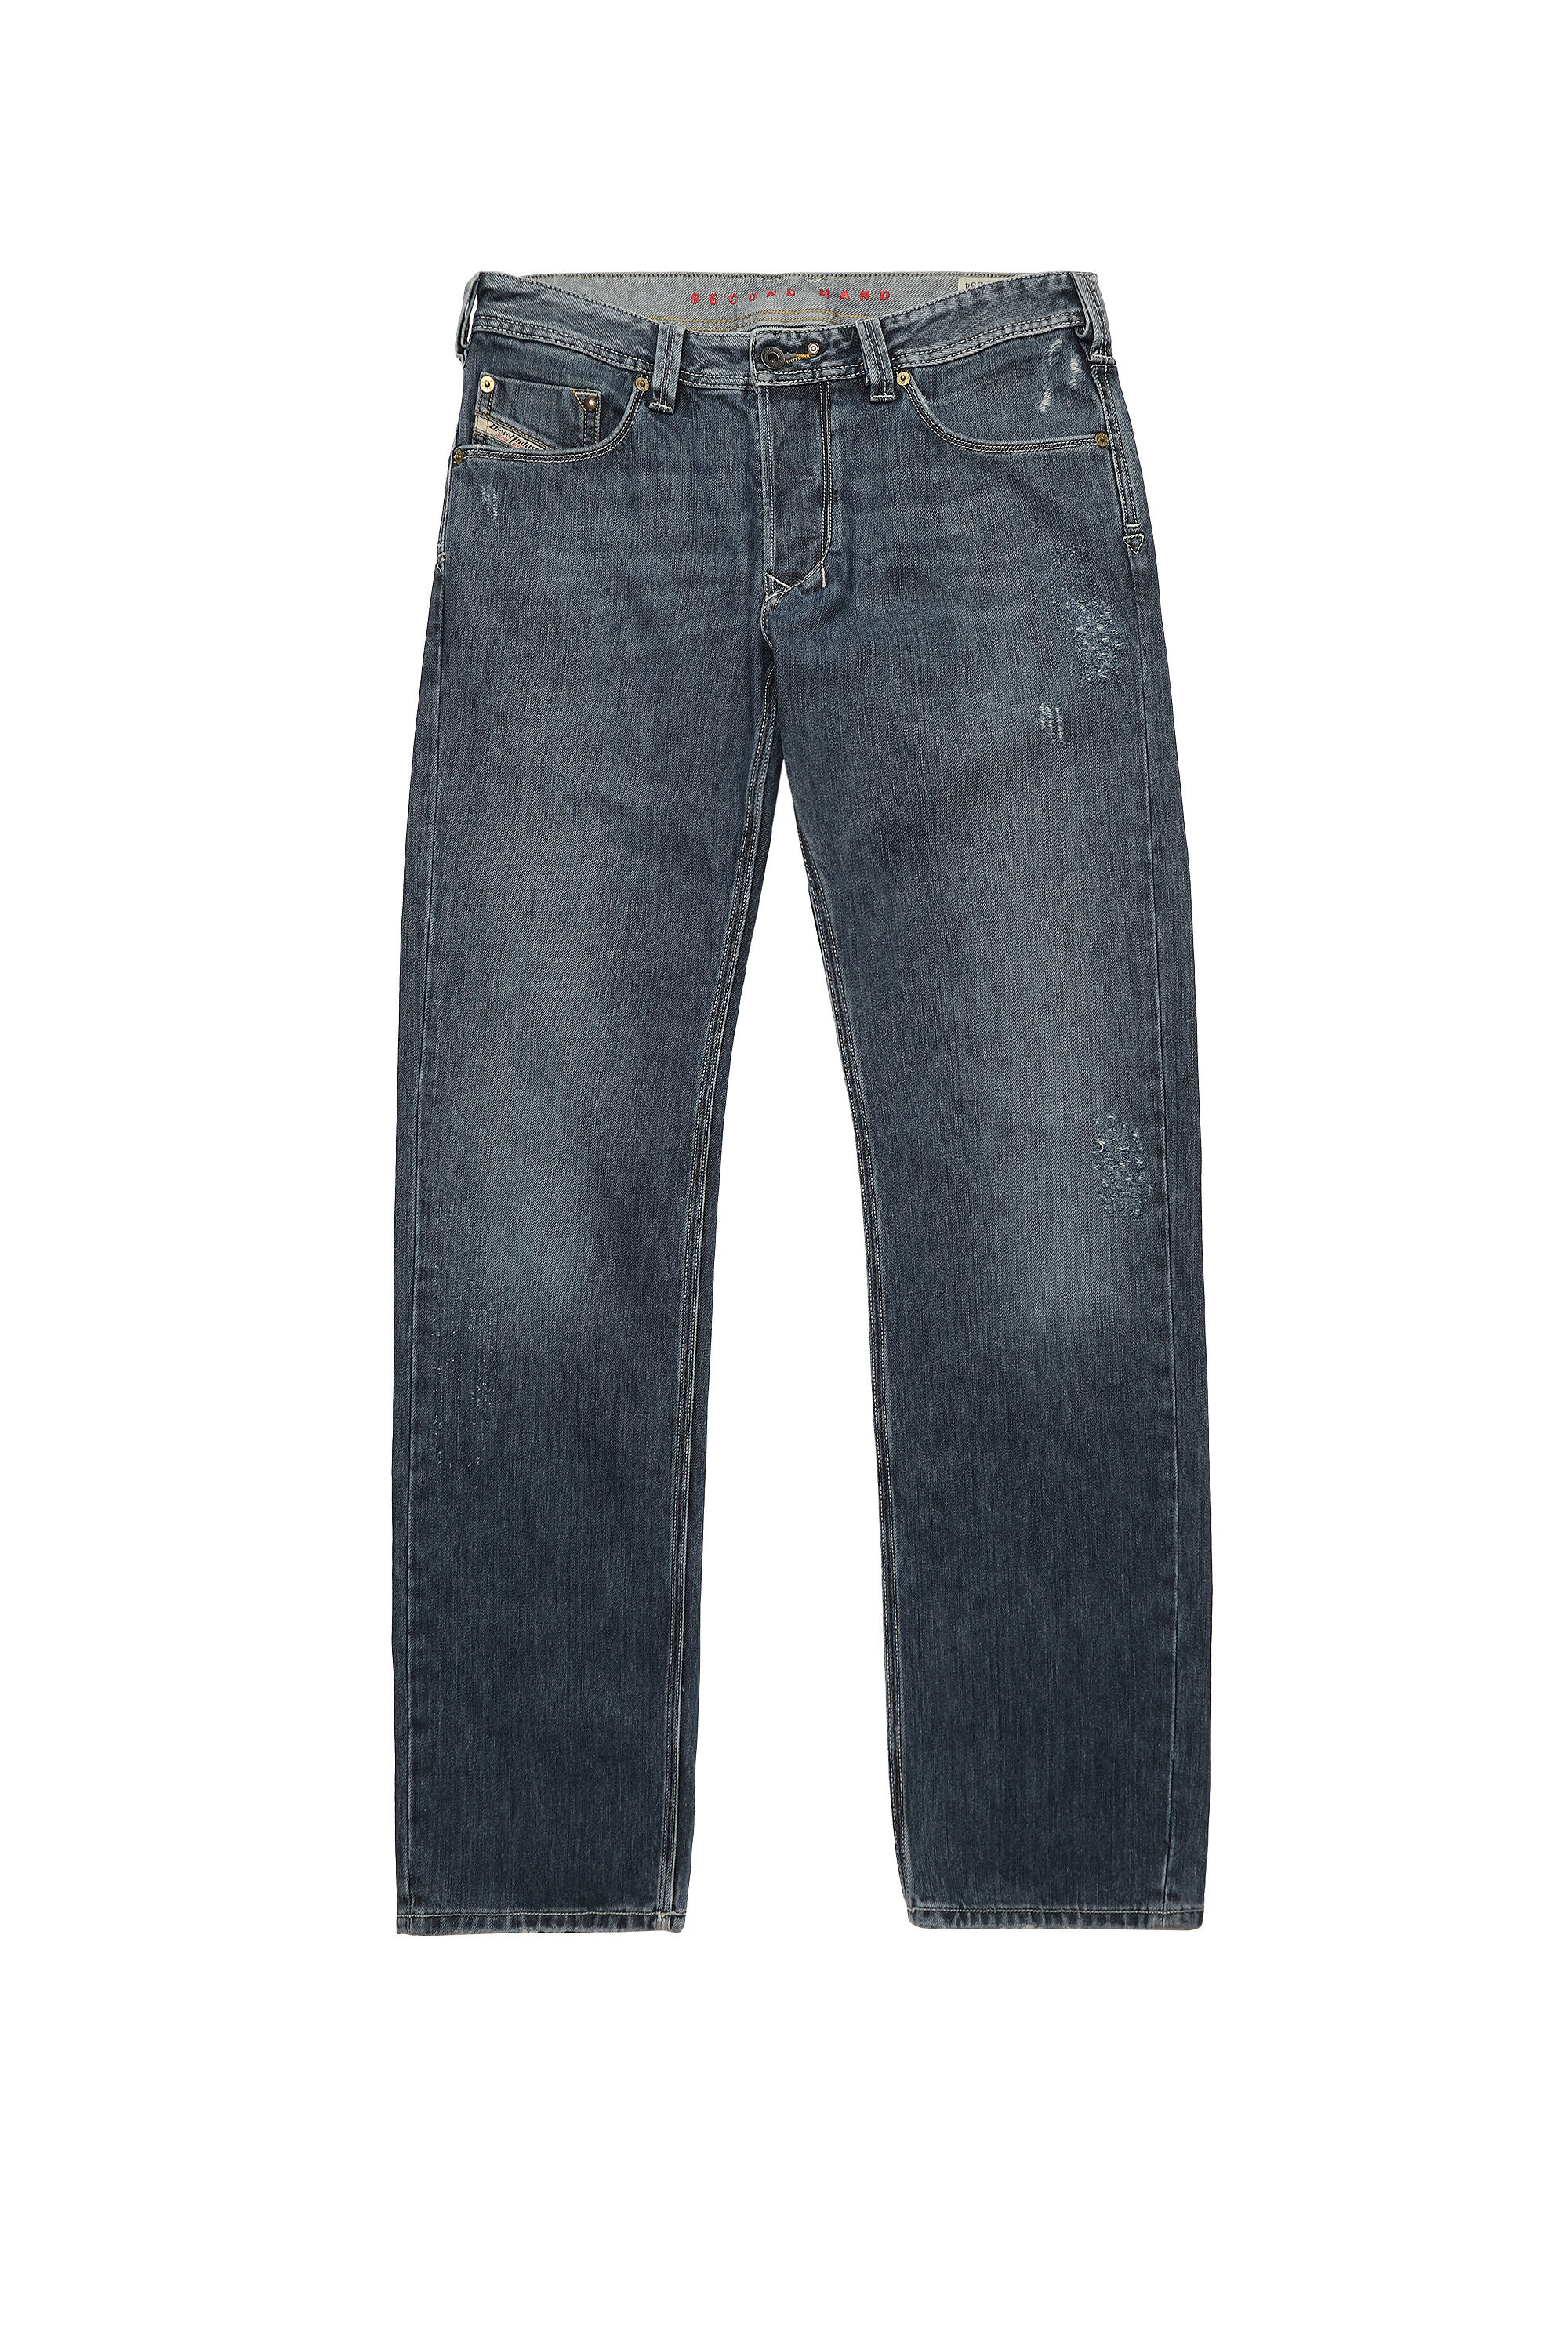 YARIK Man - Jeans Medium blue | Diesel Second Hand